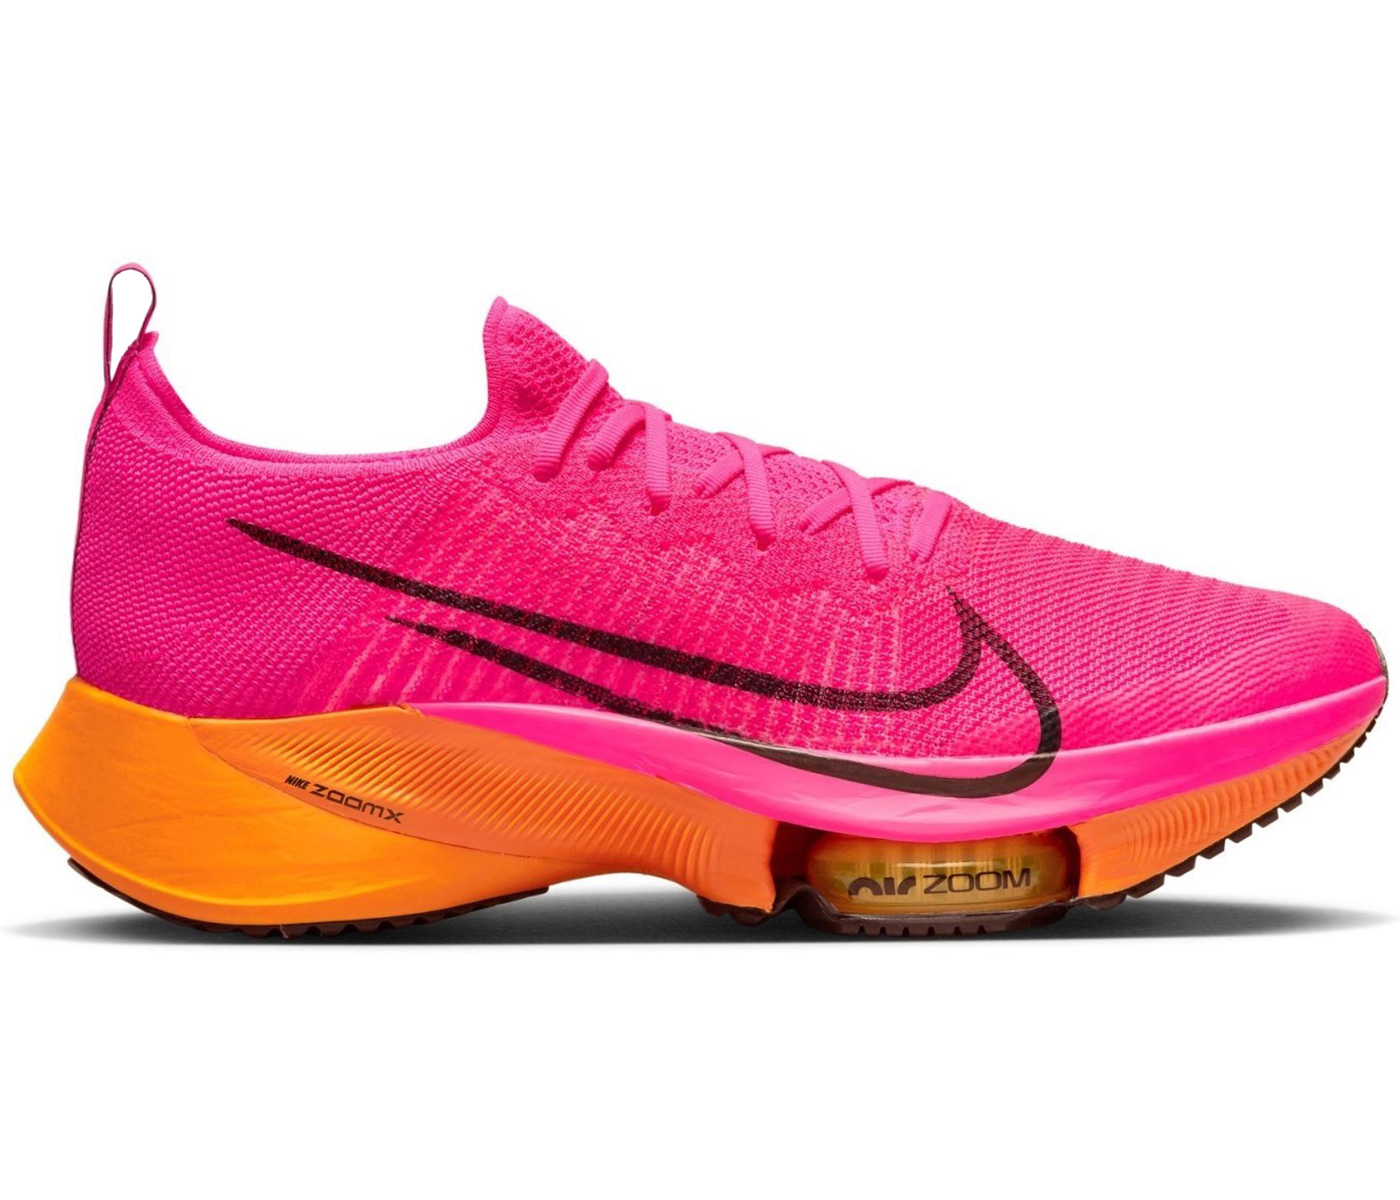 Nike Air Zoom Tempo Next% Flyknit Hyper Pink Laser Orange